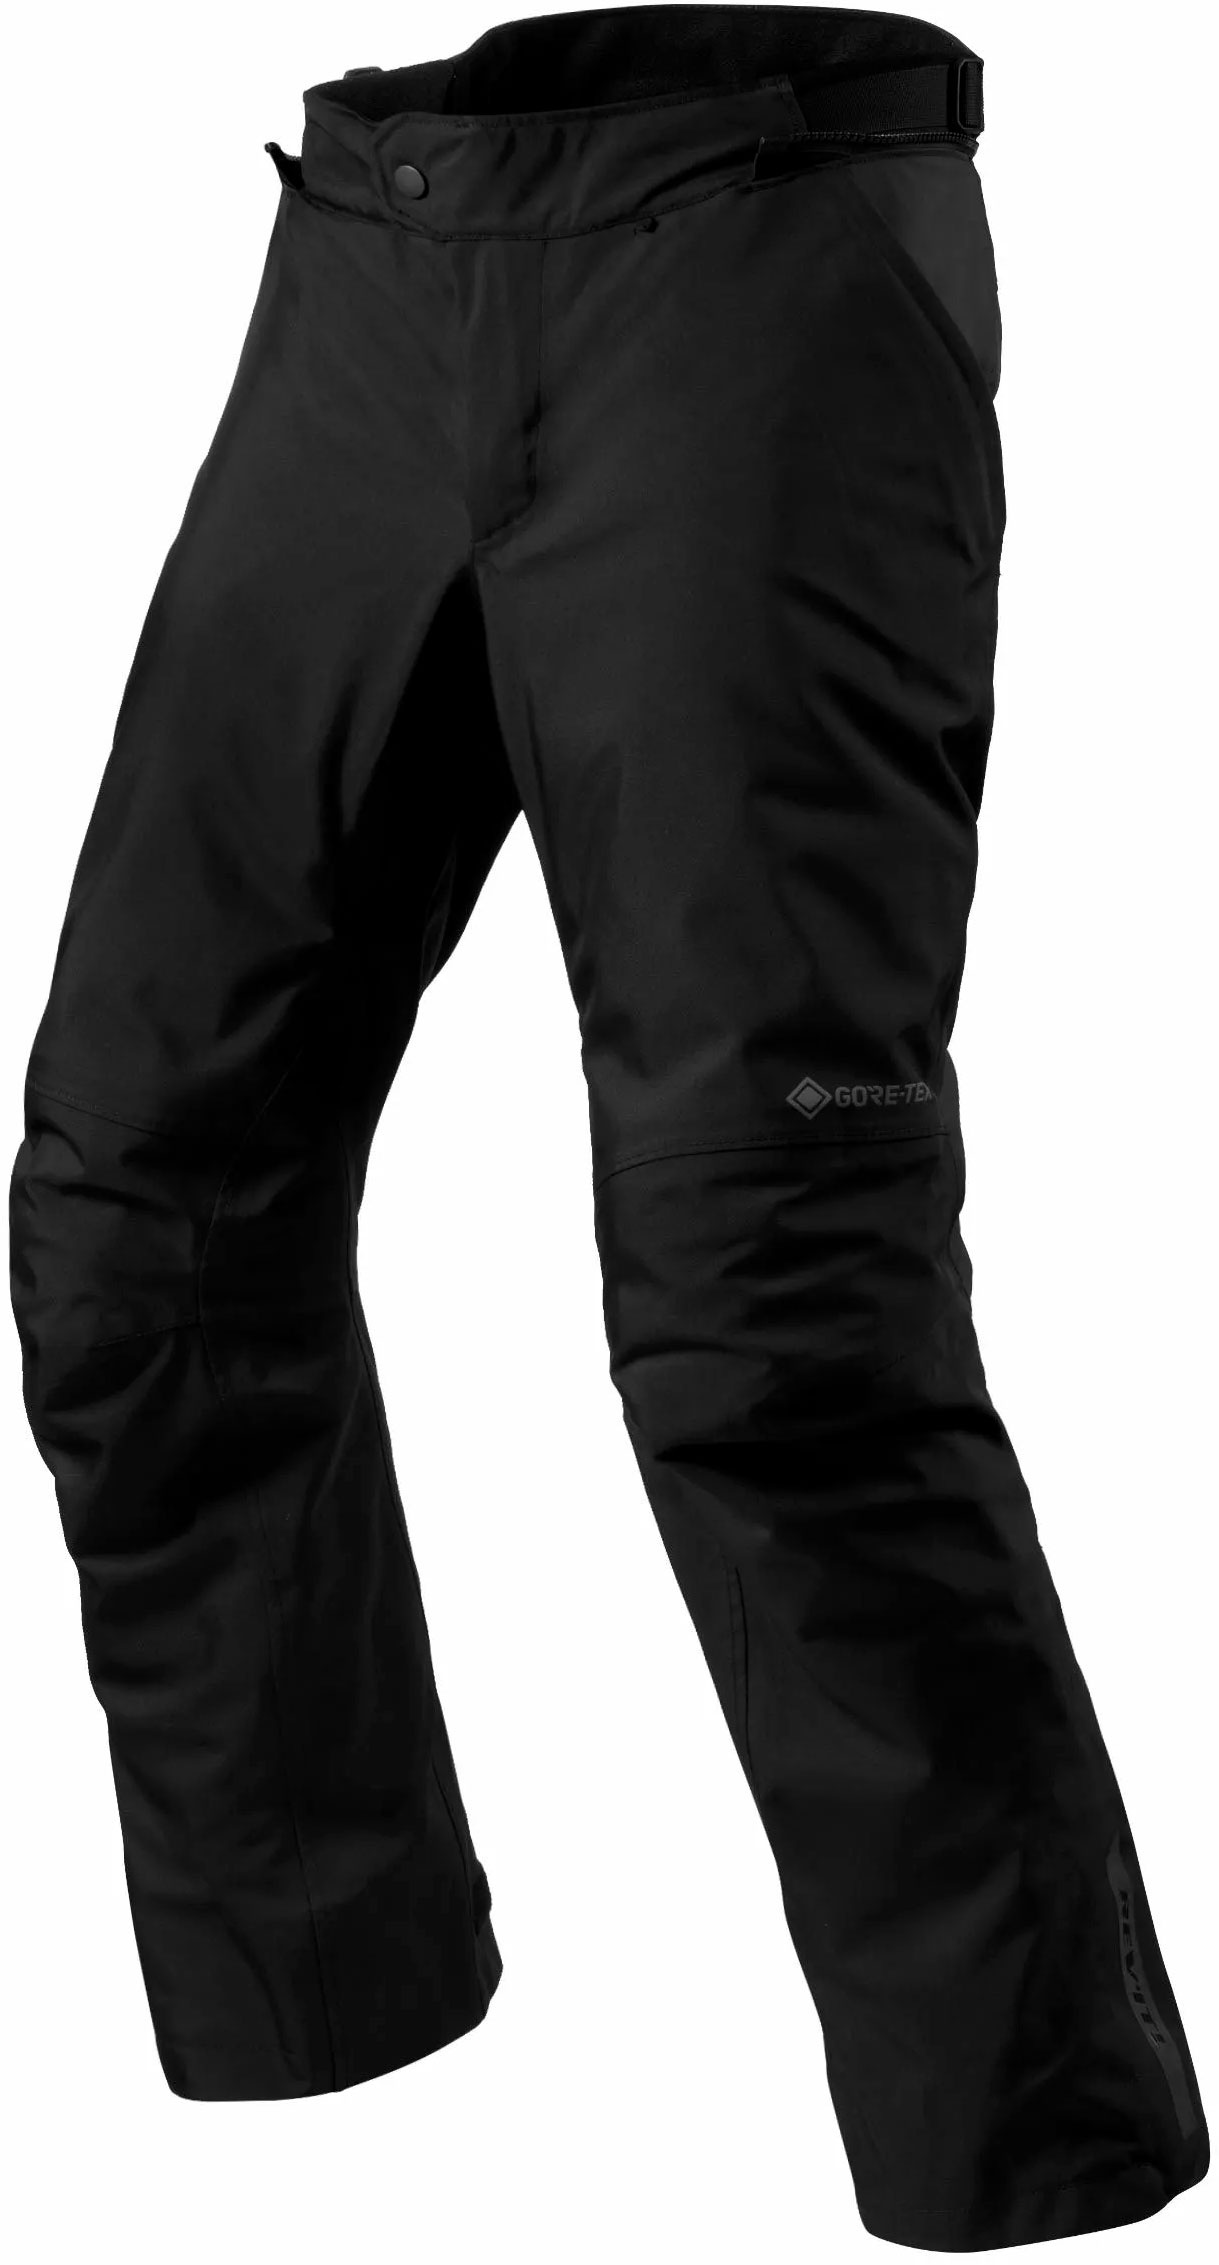 Revit Vertical GTX, pantalon textile imperméable - Noir - 4XL